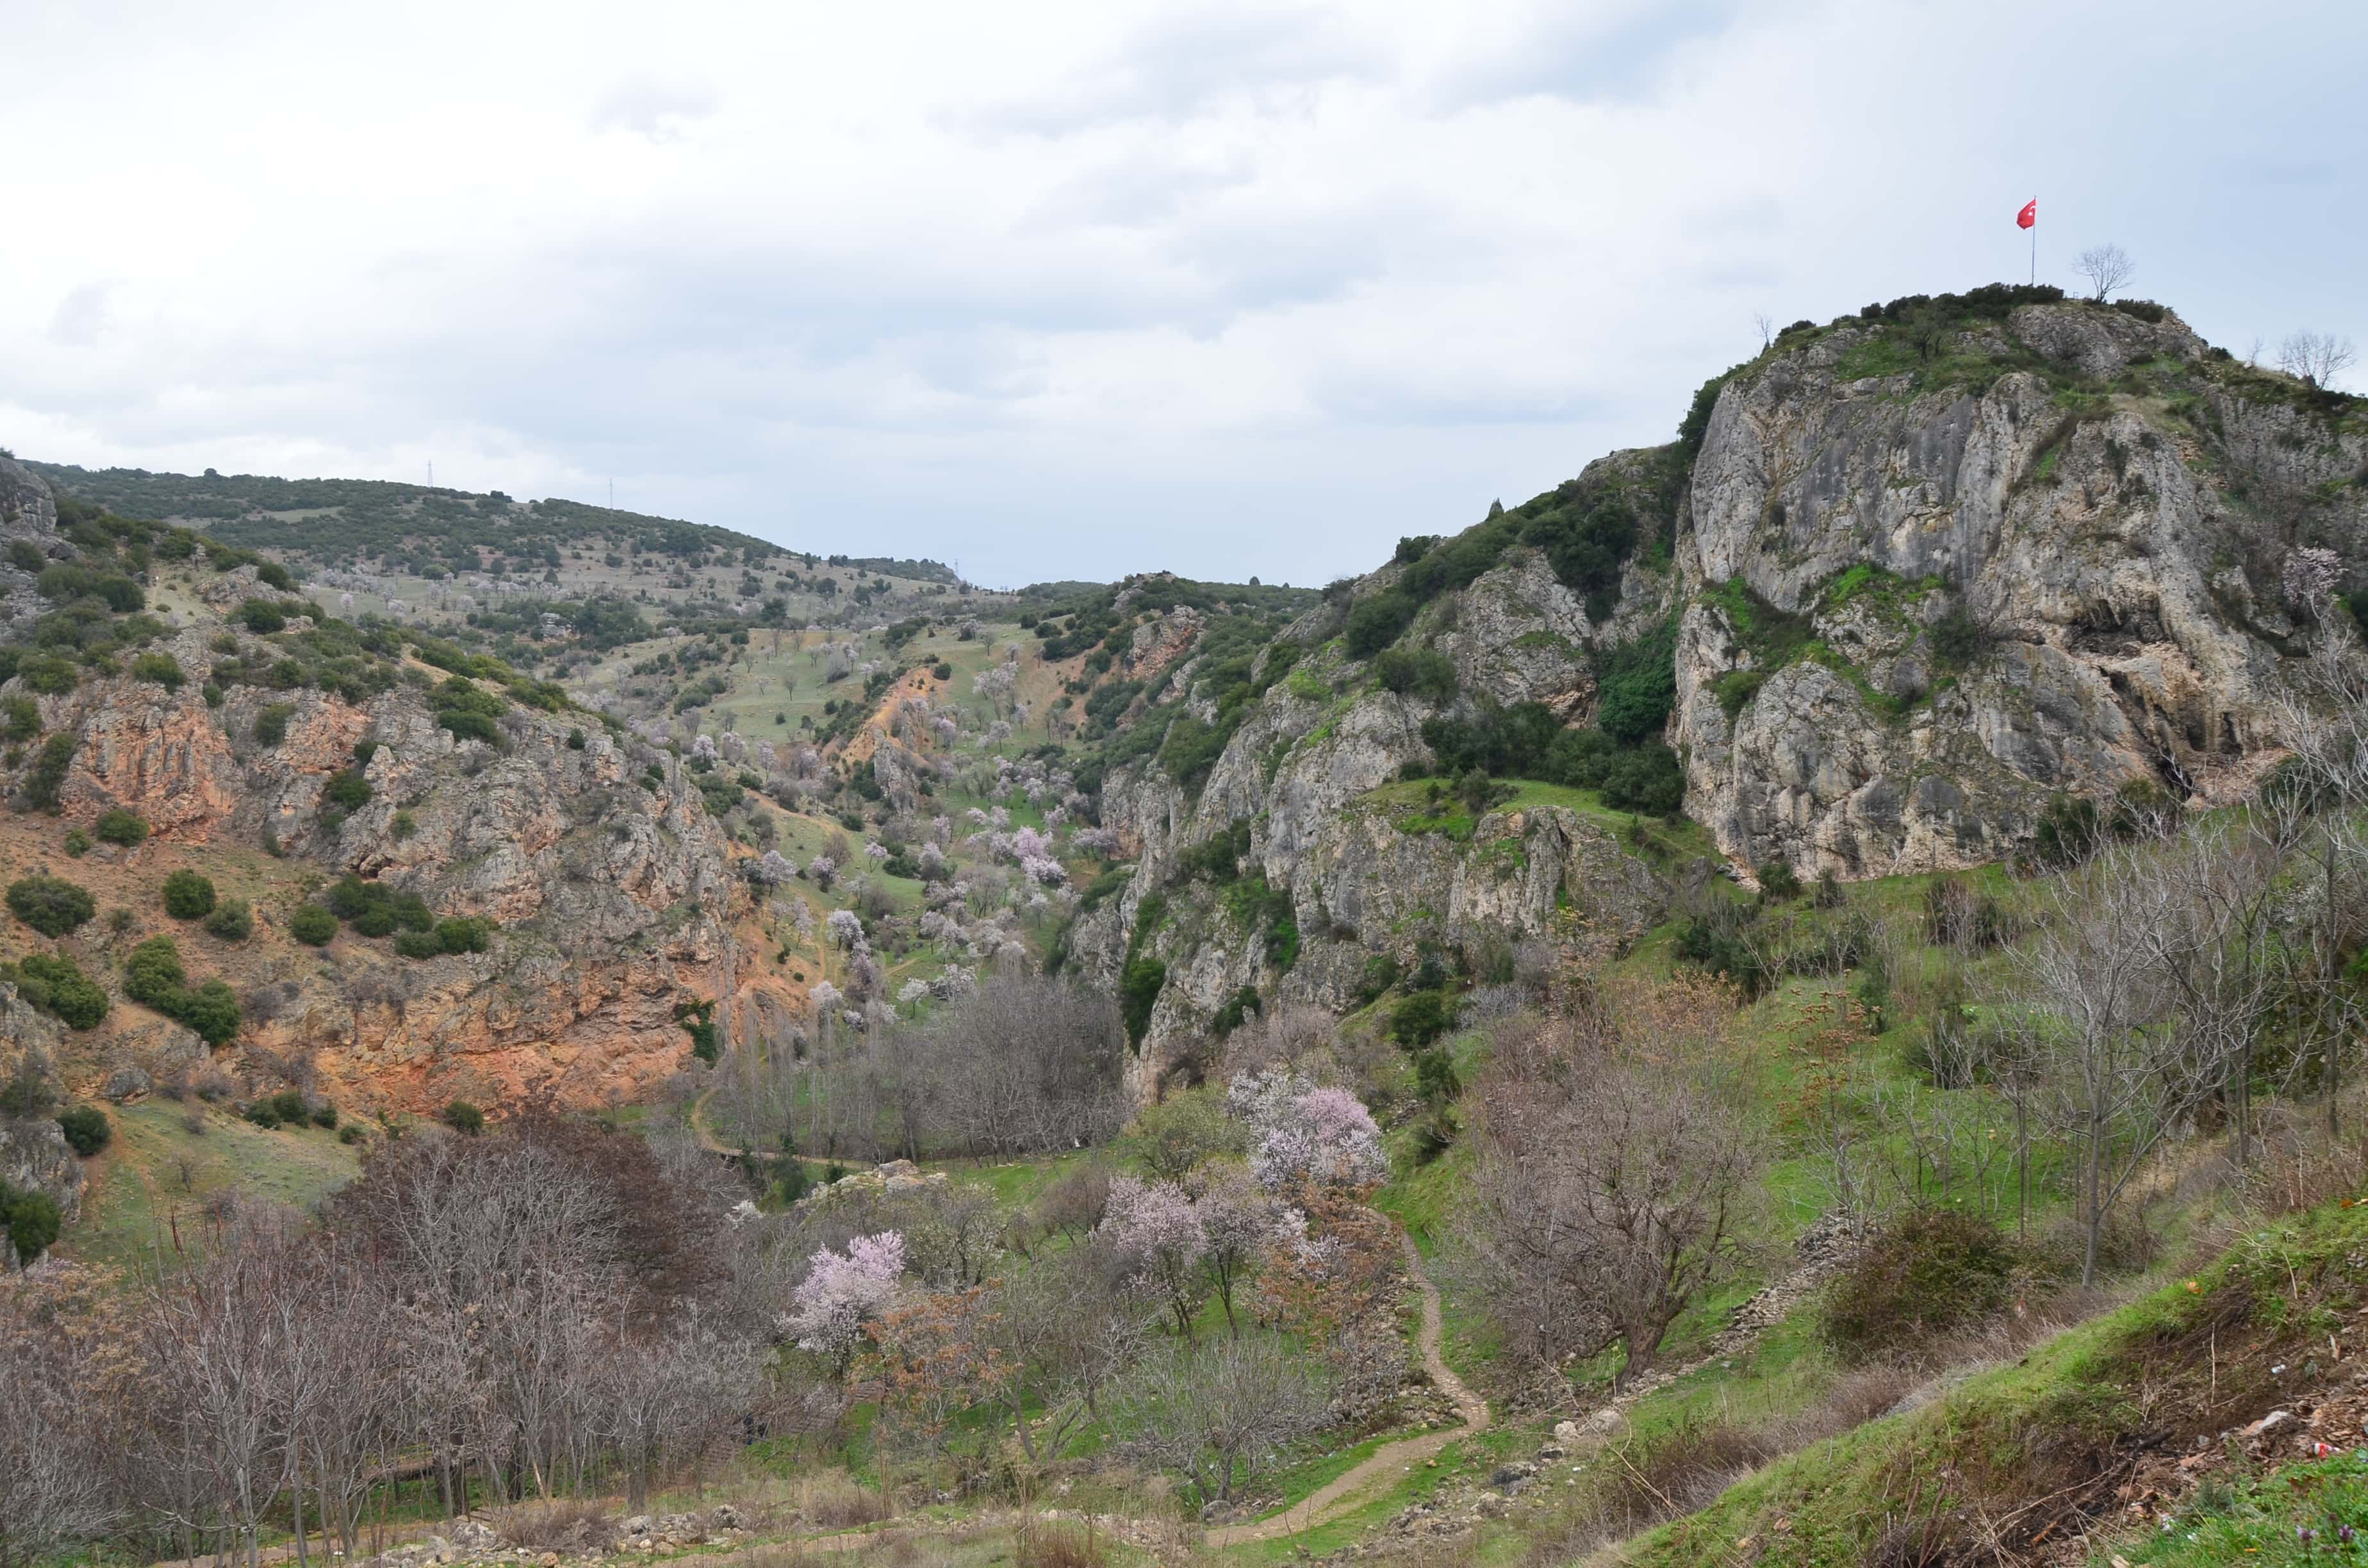 Bilecik Gorge in Bilecik, Turkey